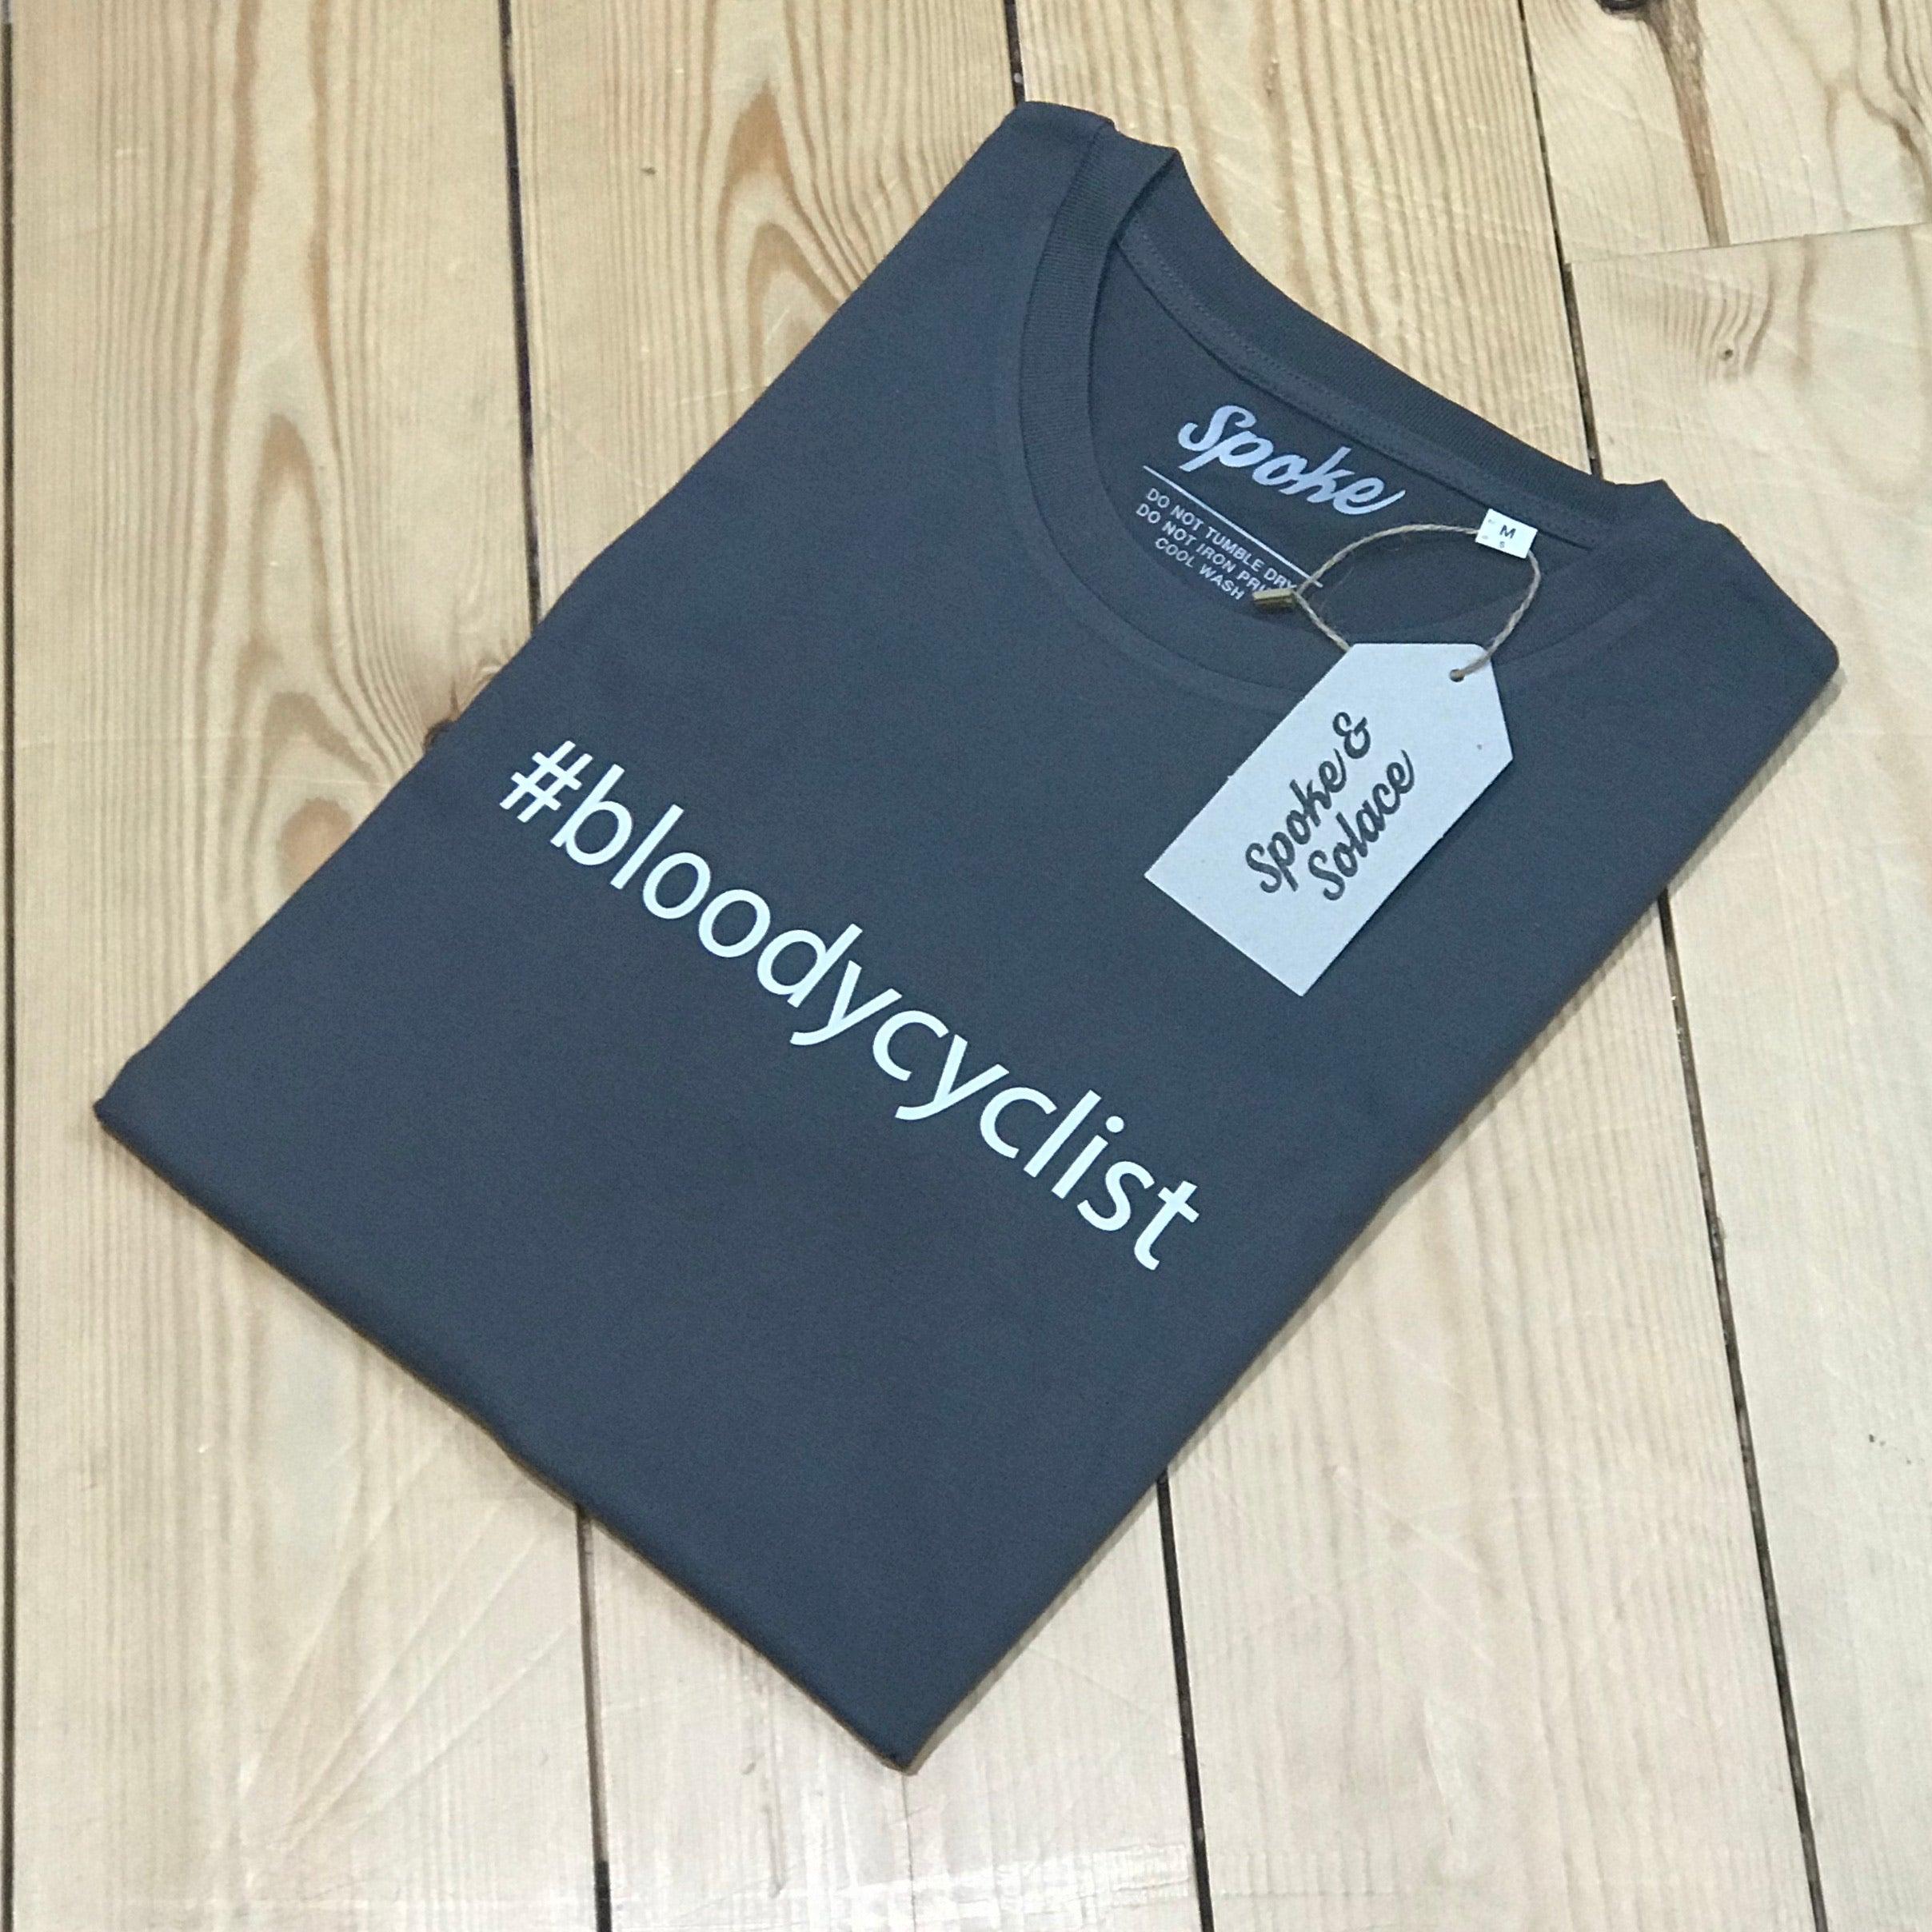 Bloody Cyclist! T-Shirt - Spoke & Solace